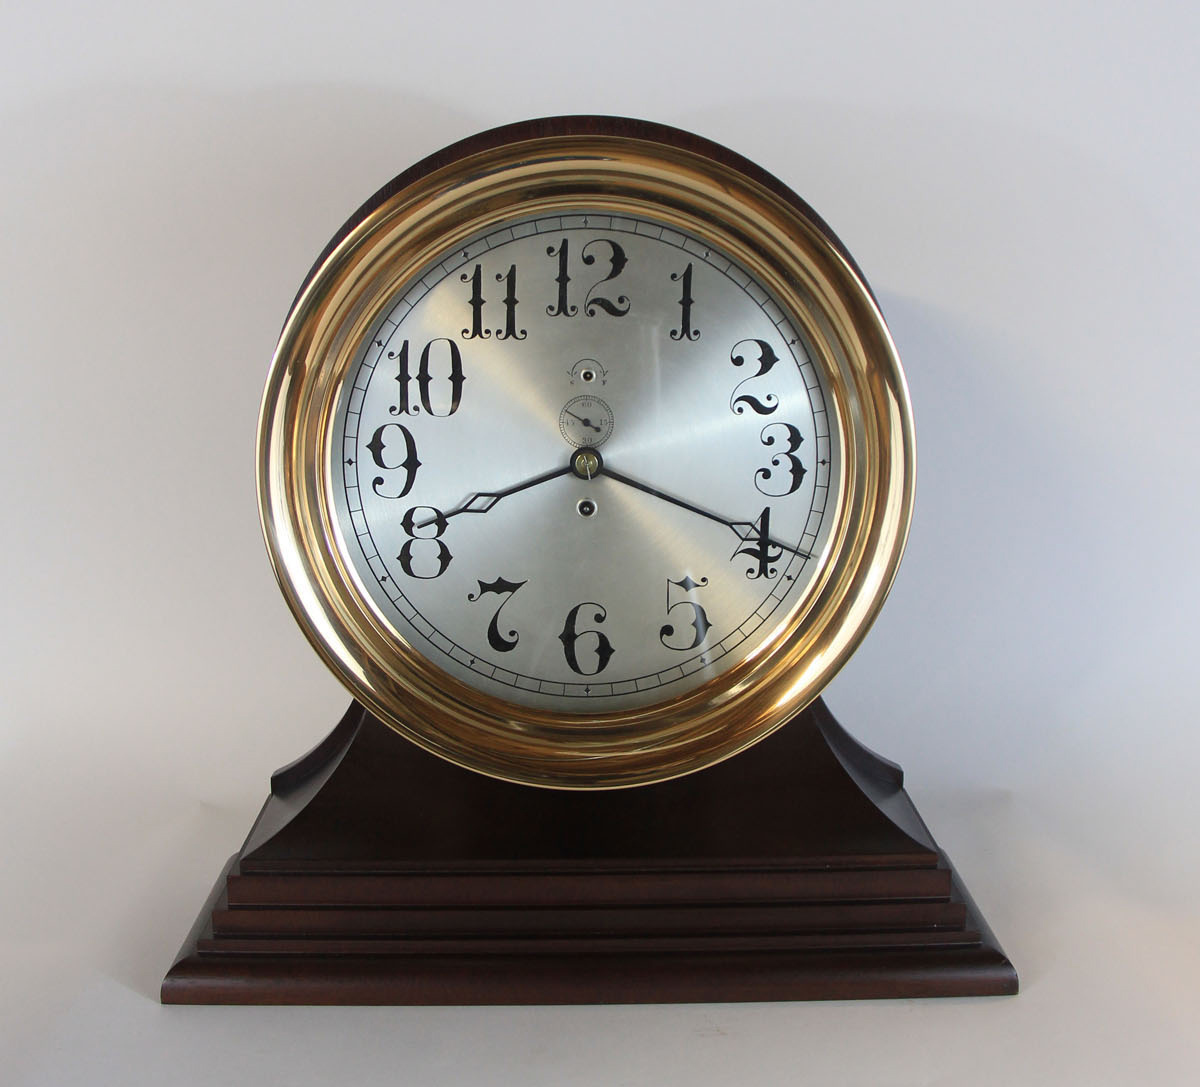 E. Howard 12 inch Marine Clock with Unusual Arabic Numerals